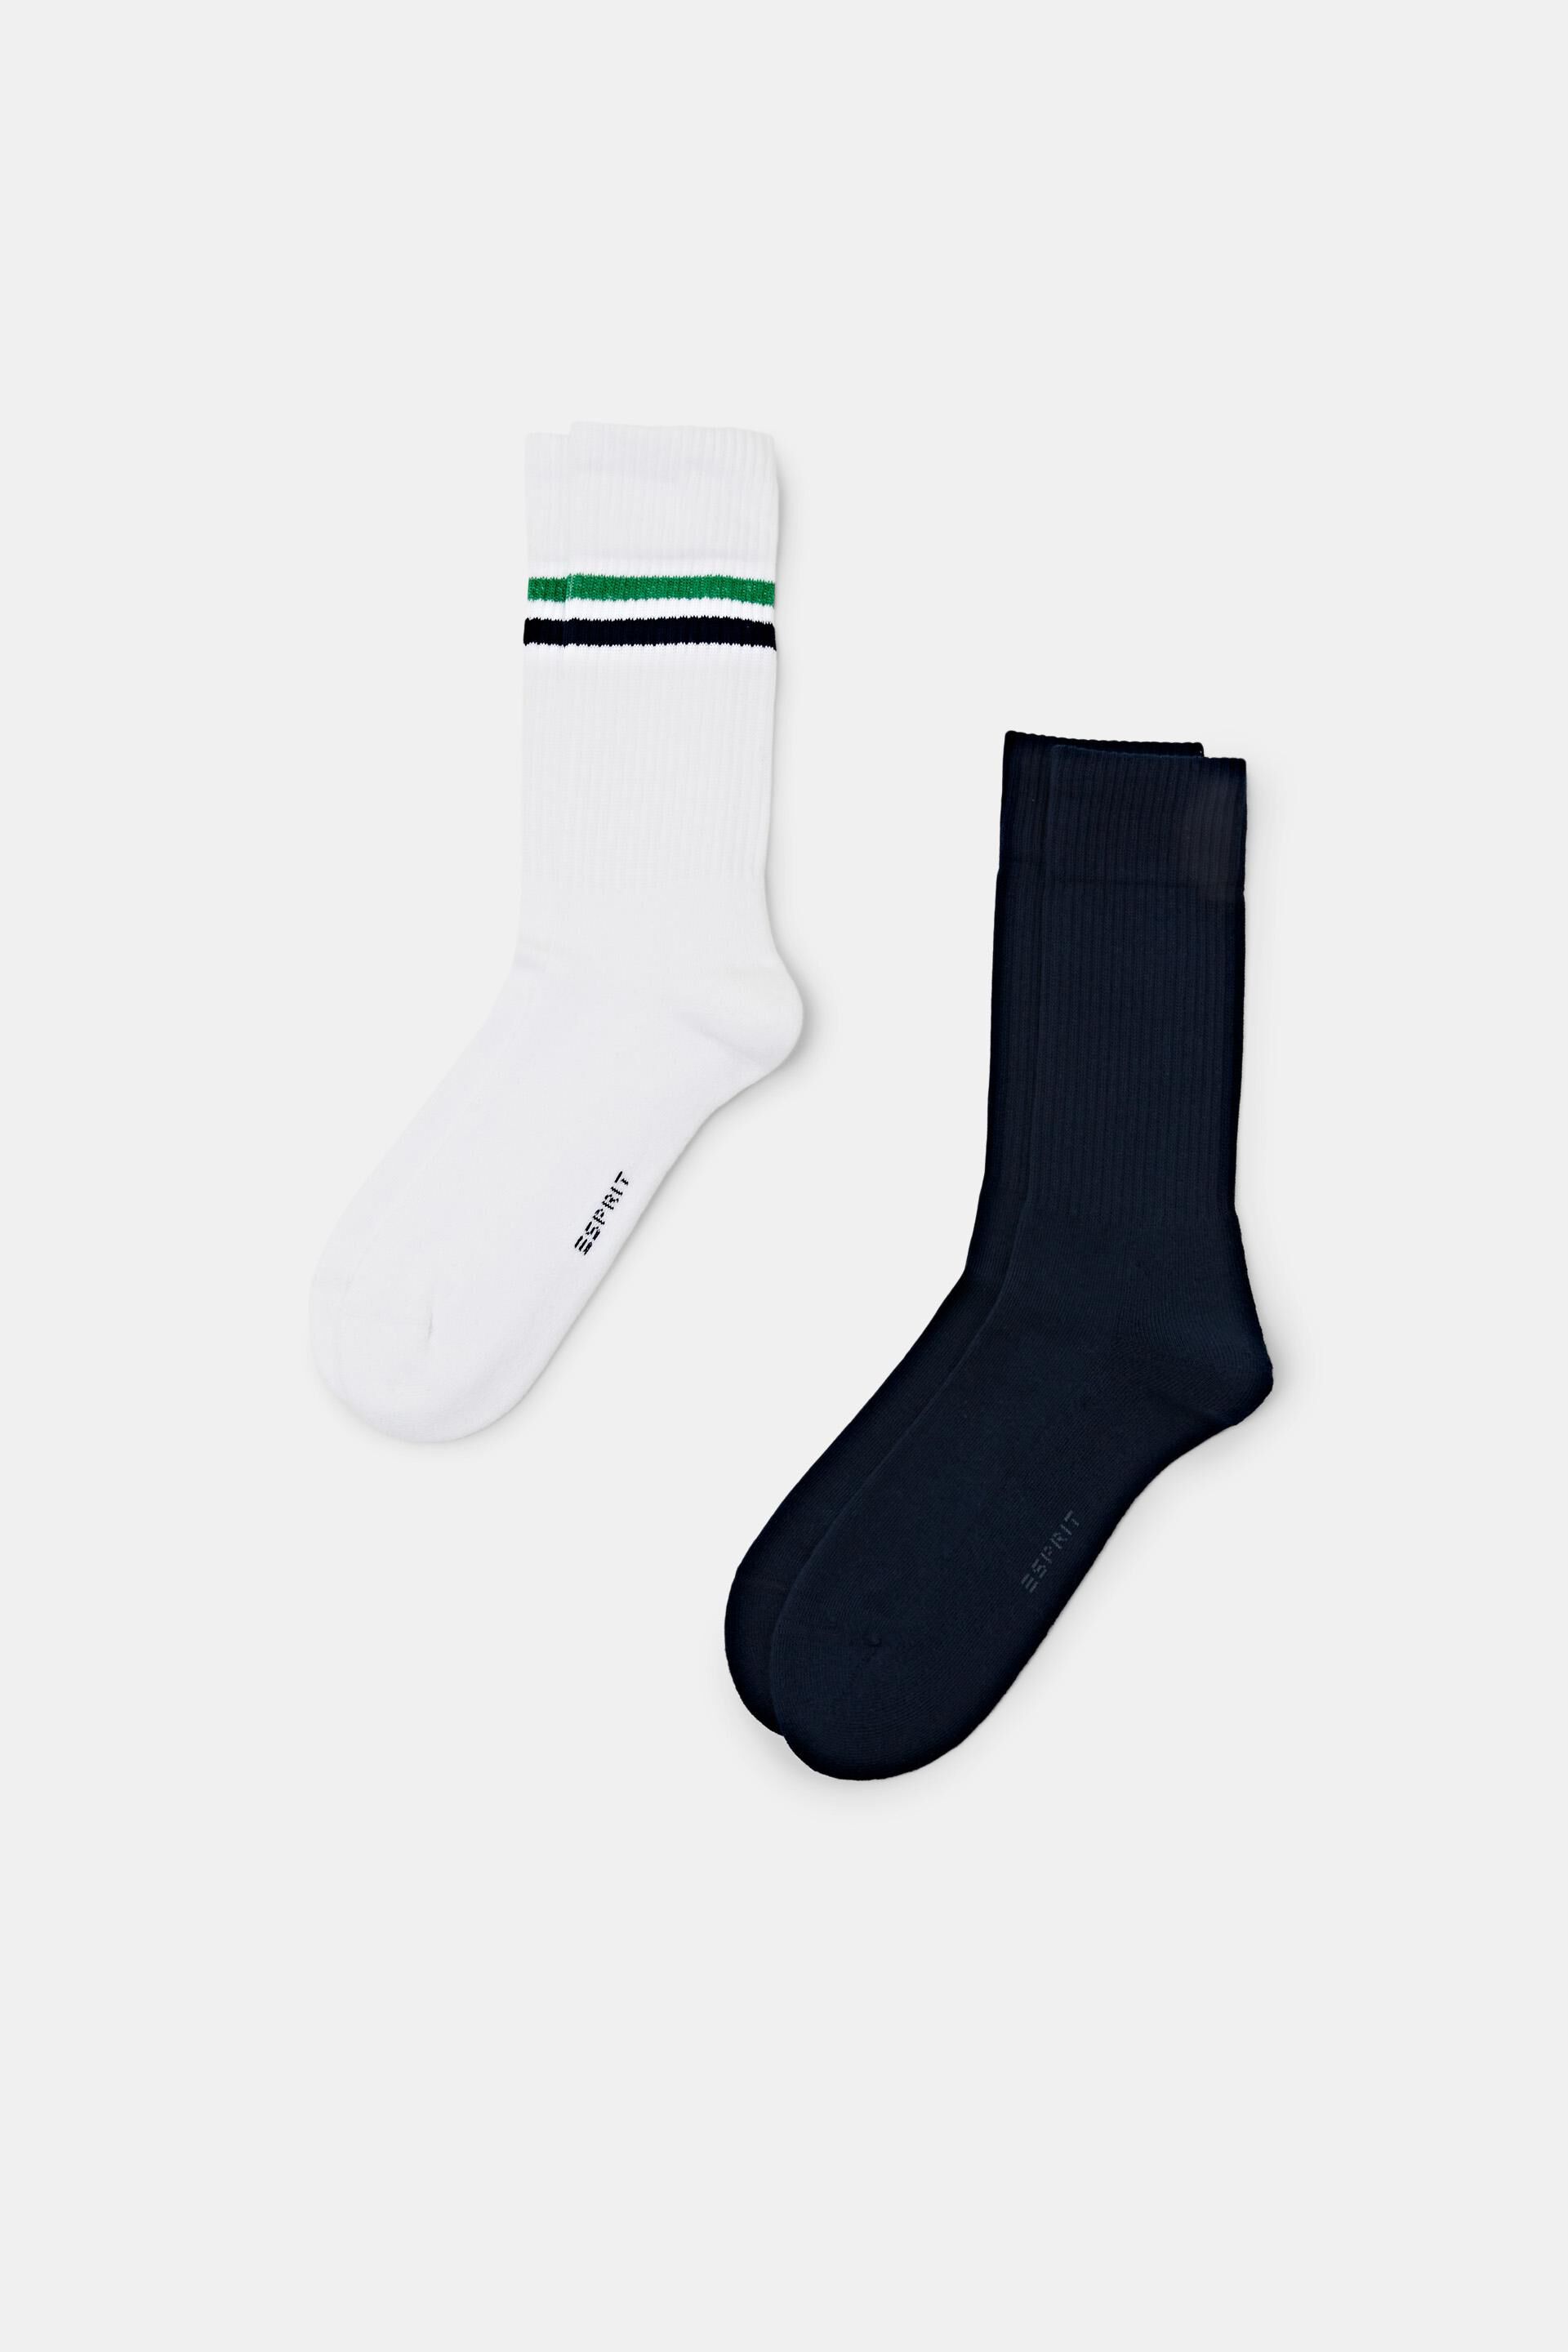 Esprit organic of athletic 2-pack cotton socks,